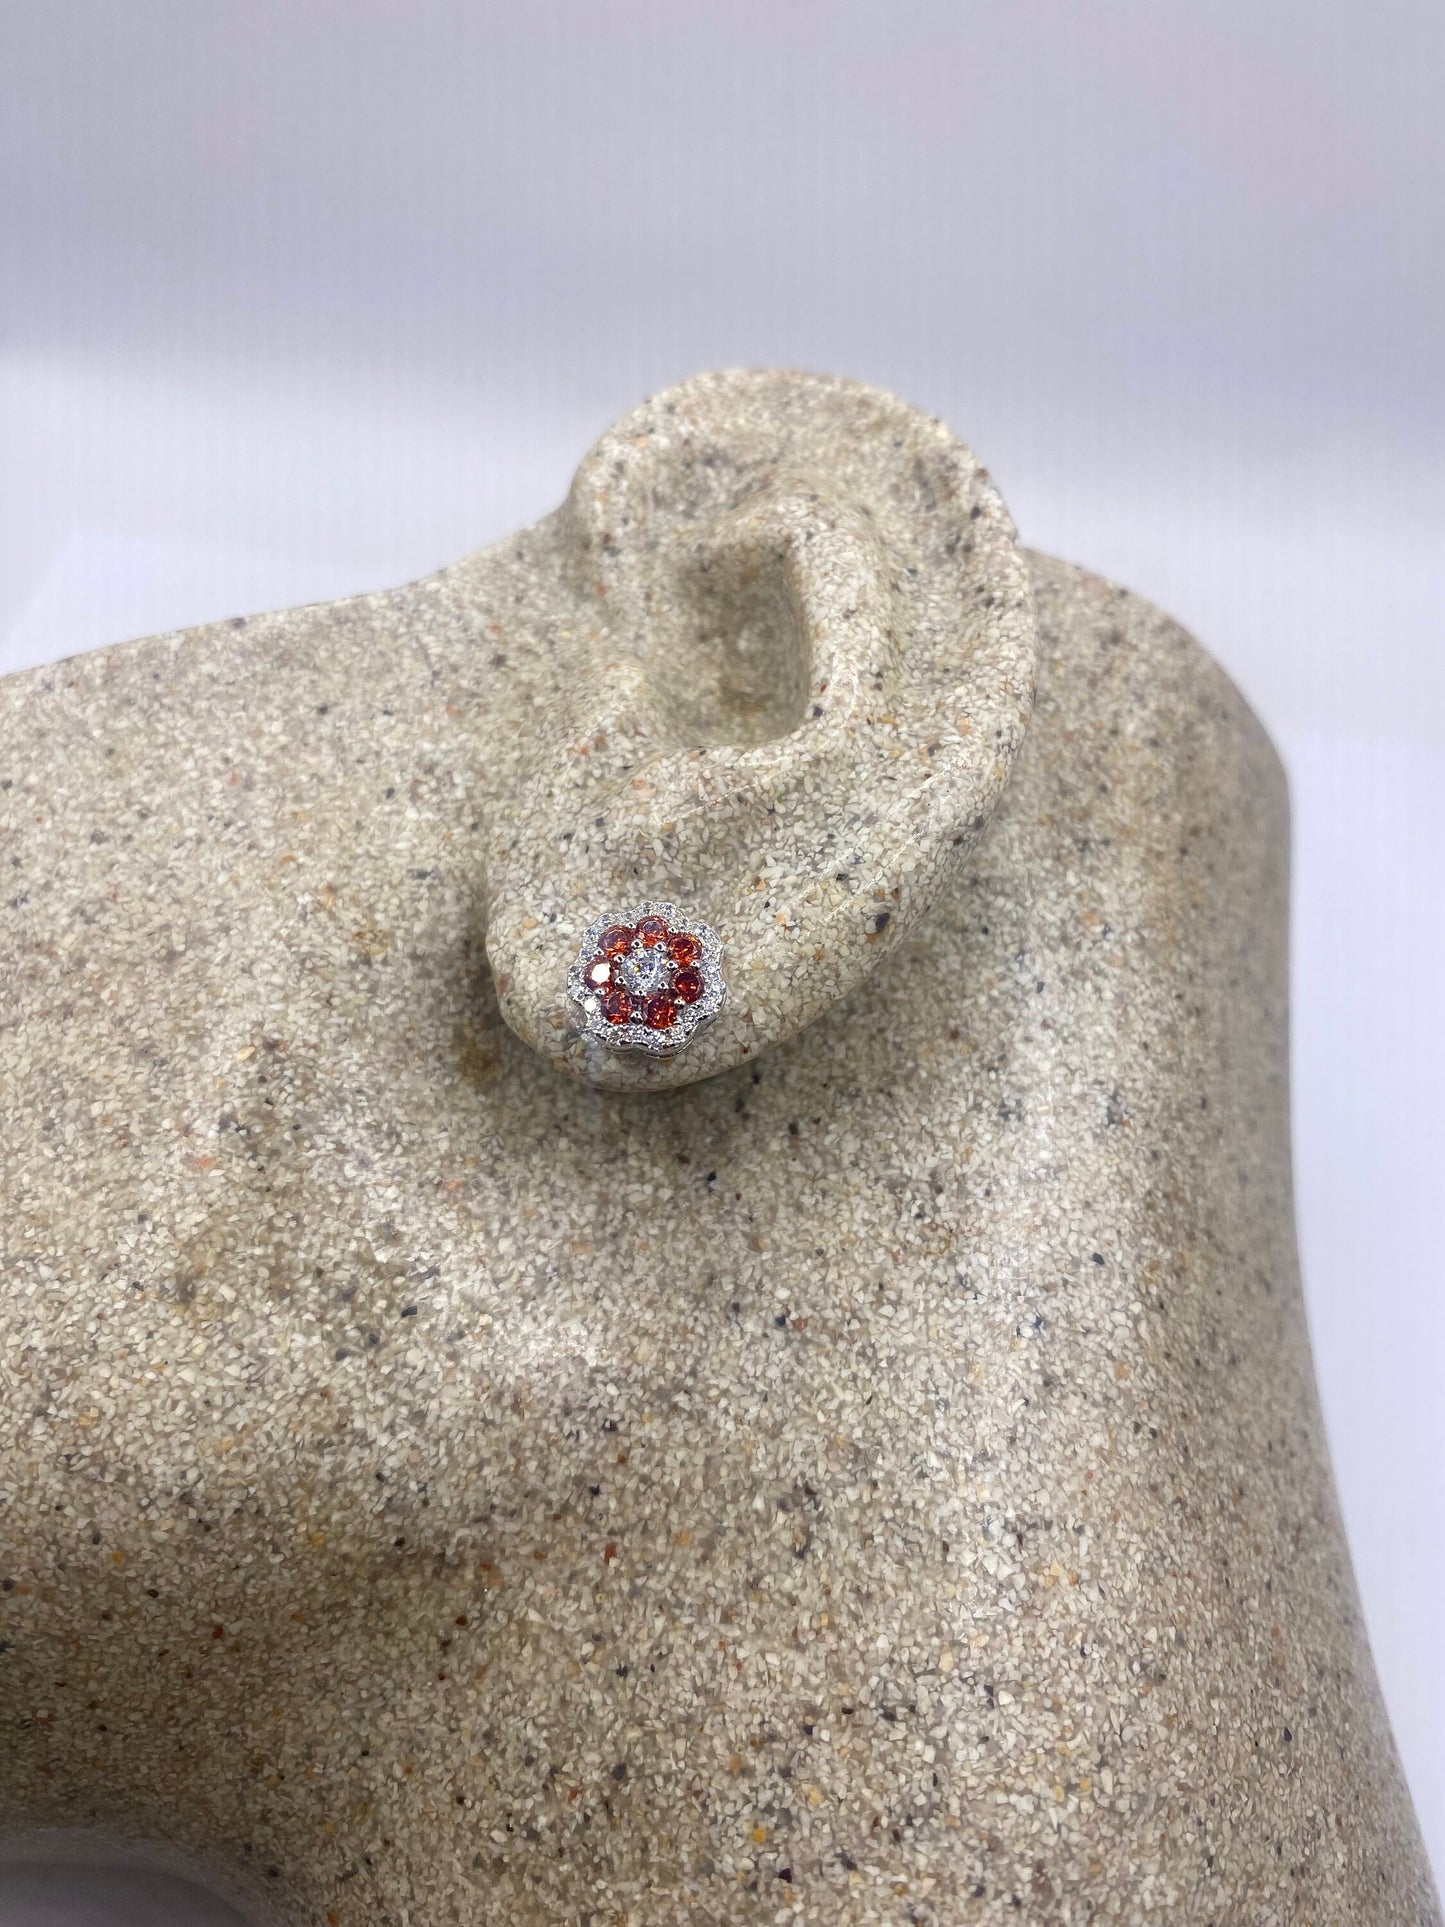 Vintage Cubic Zirconia Earrings 925 Sterling Silver Stud Button